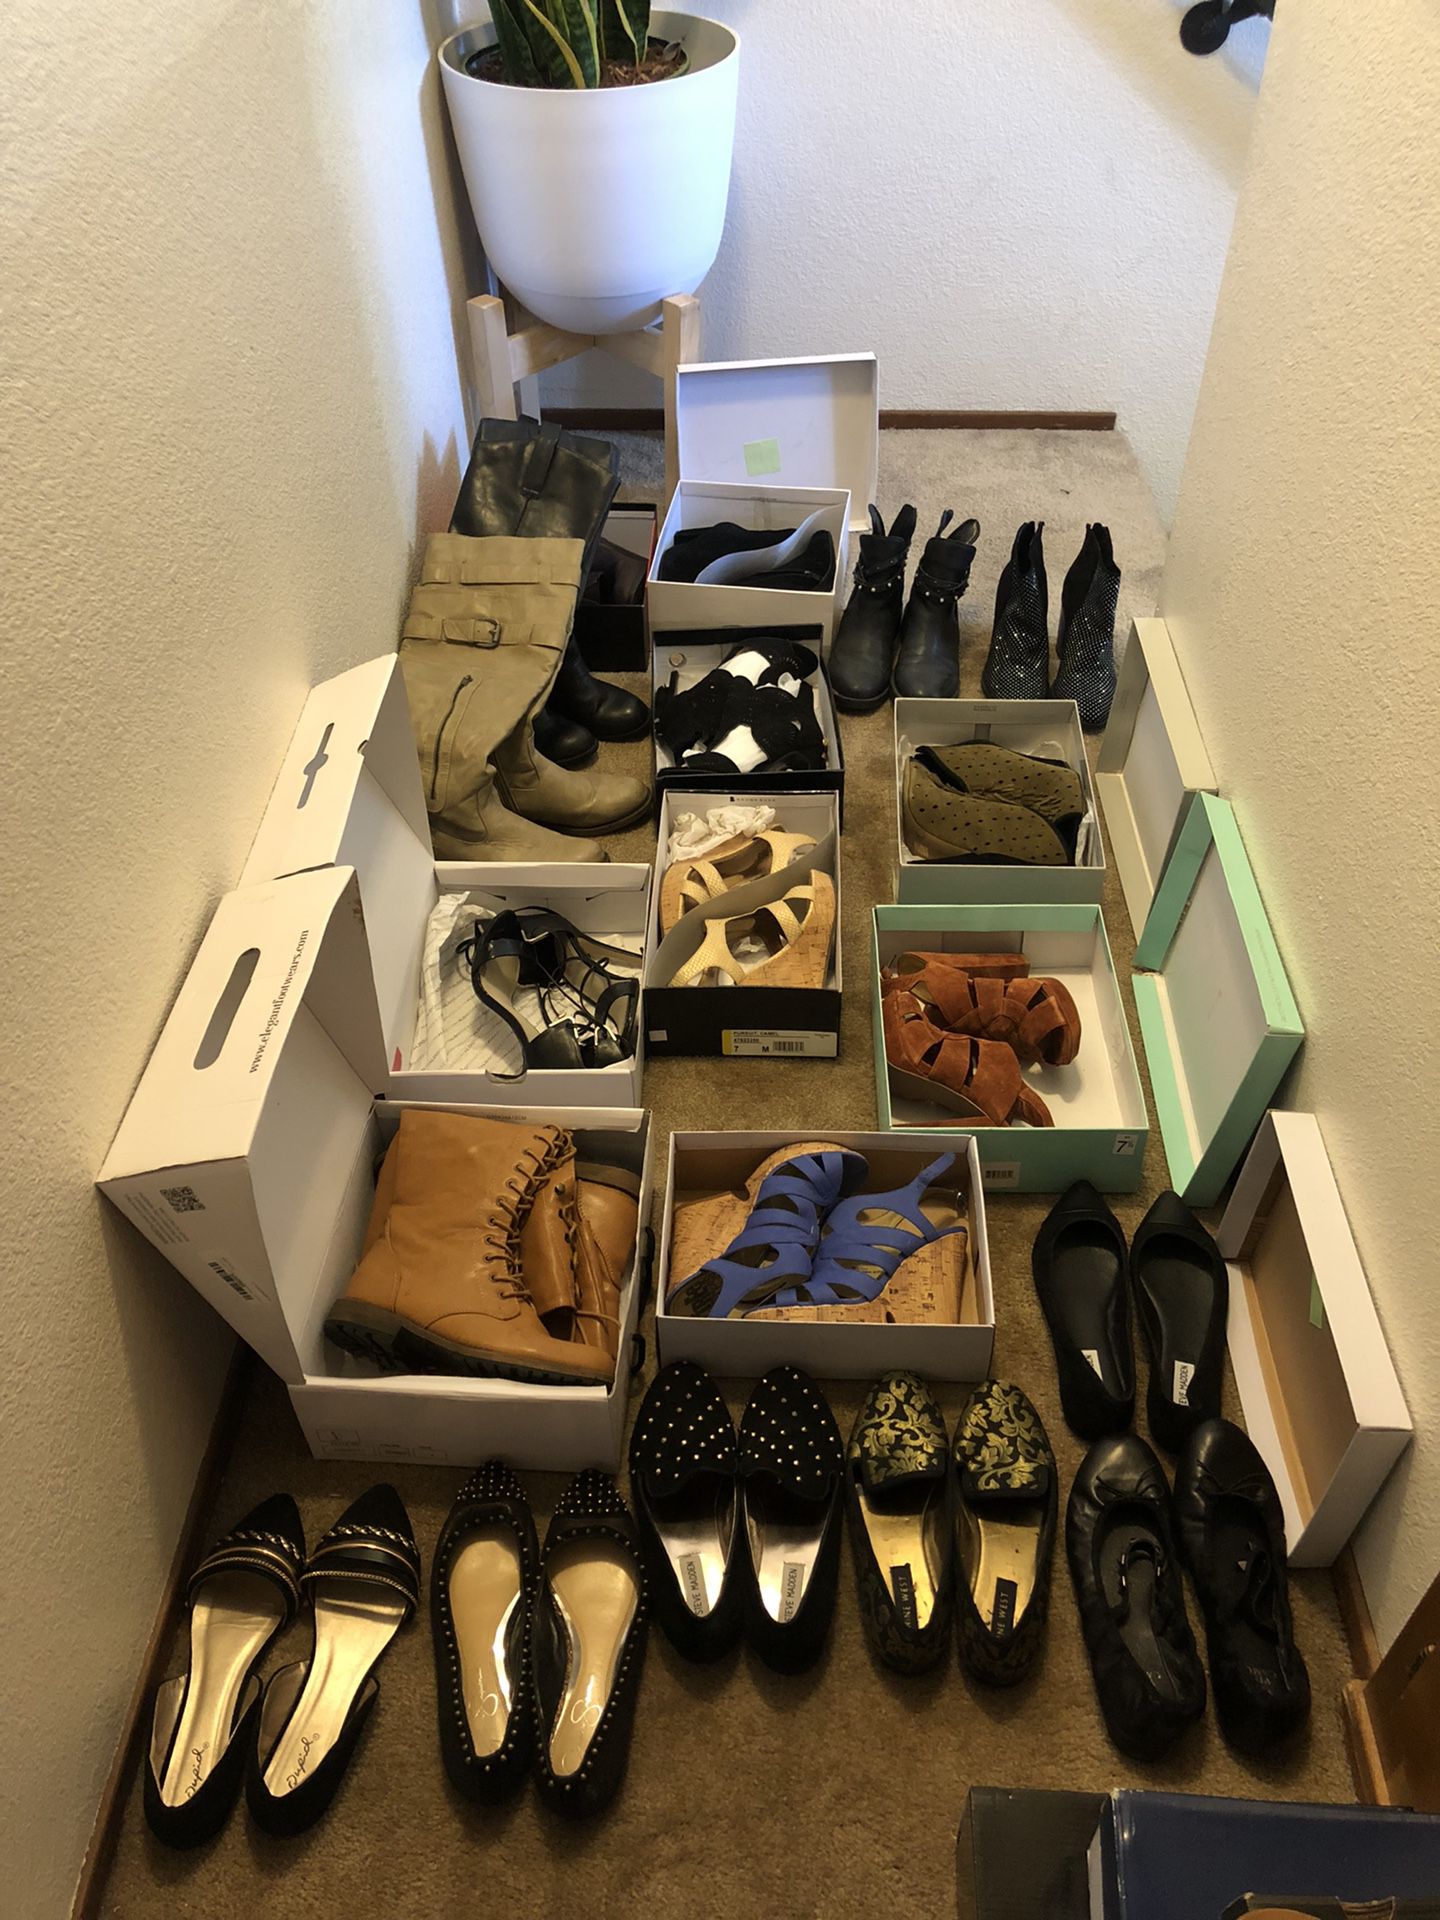 huge bundle of size 7-7.5 women’s shoes